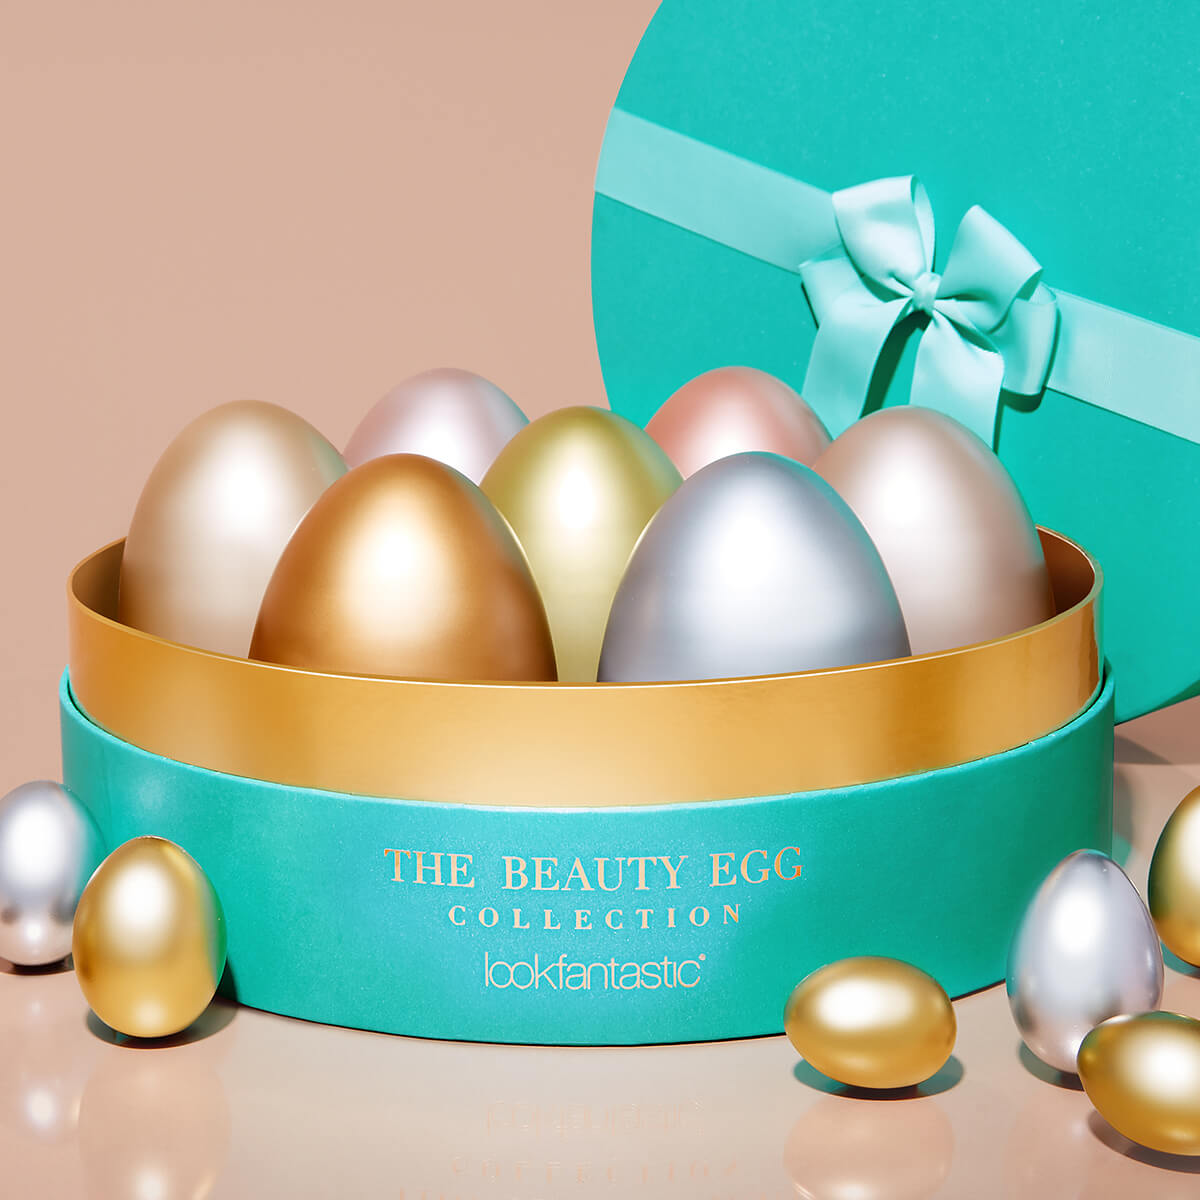 Die Lookfantastic Easter Egg Collection 2019